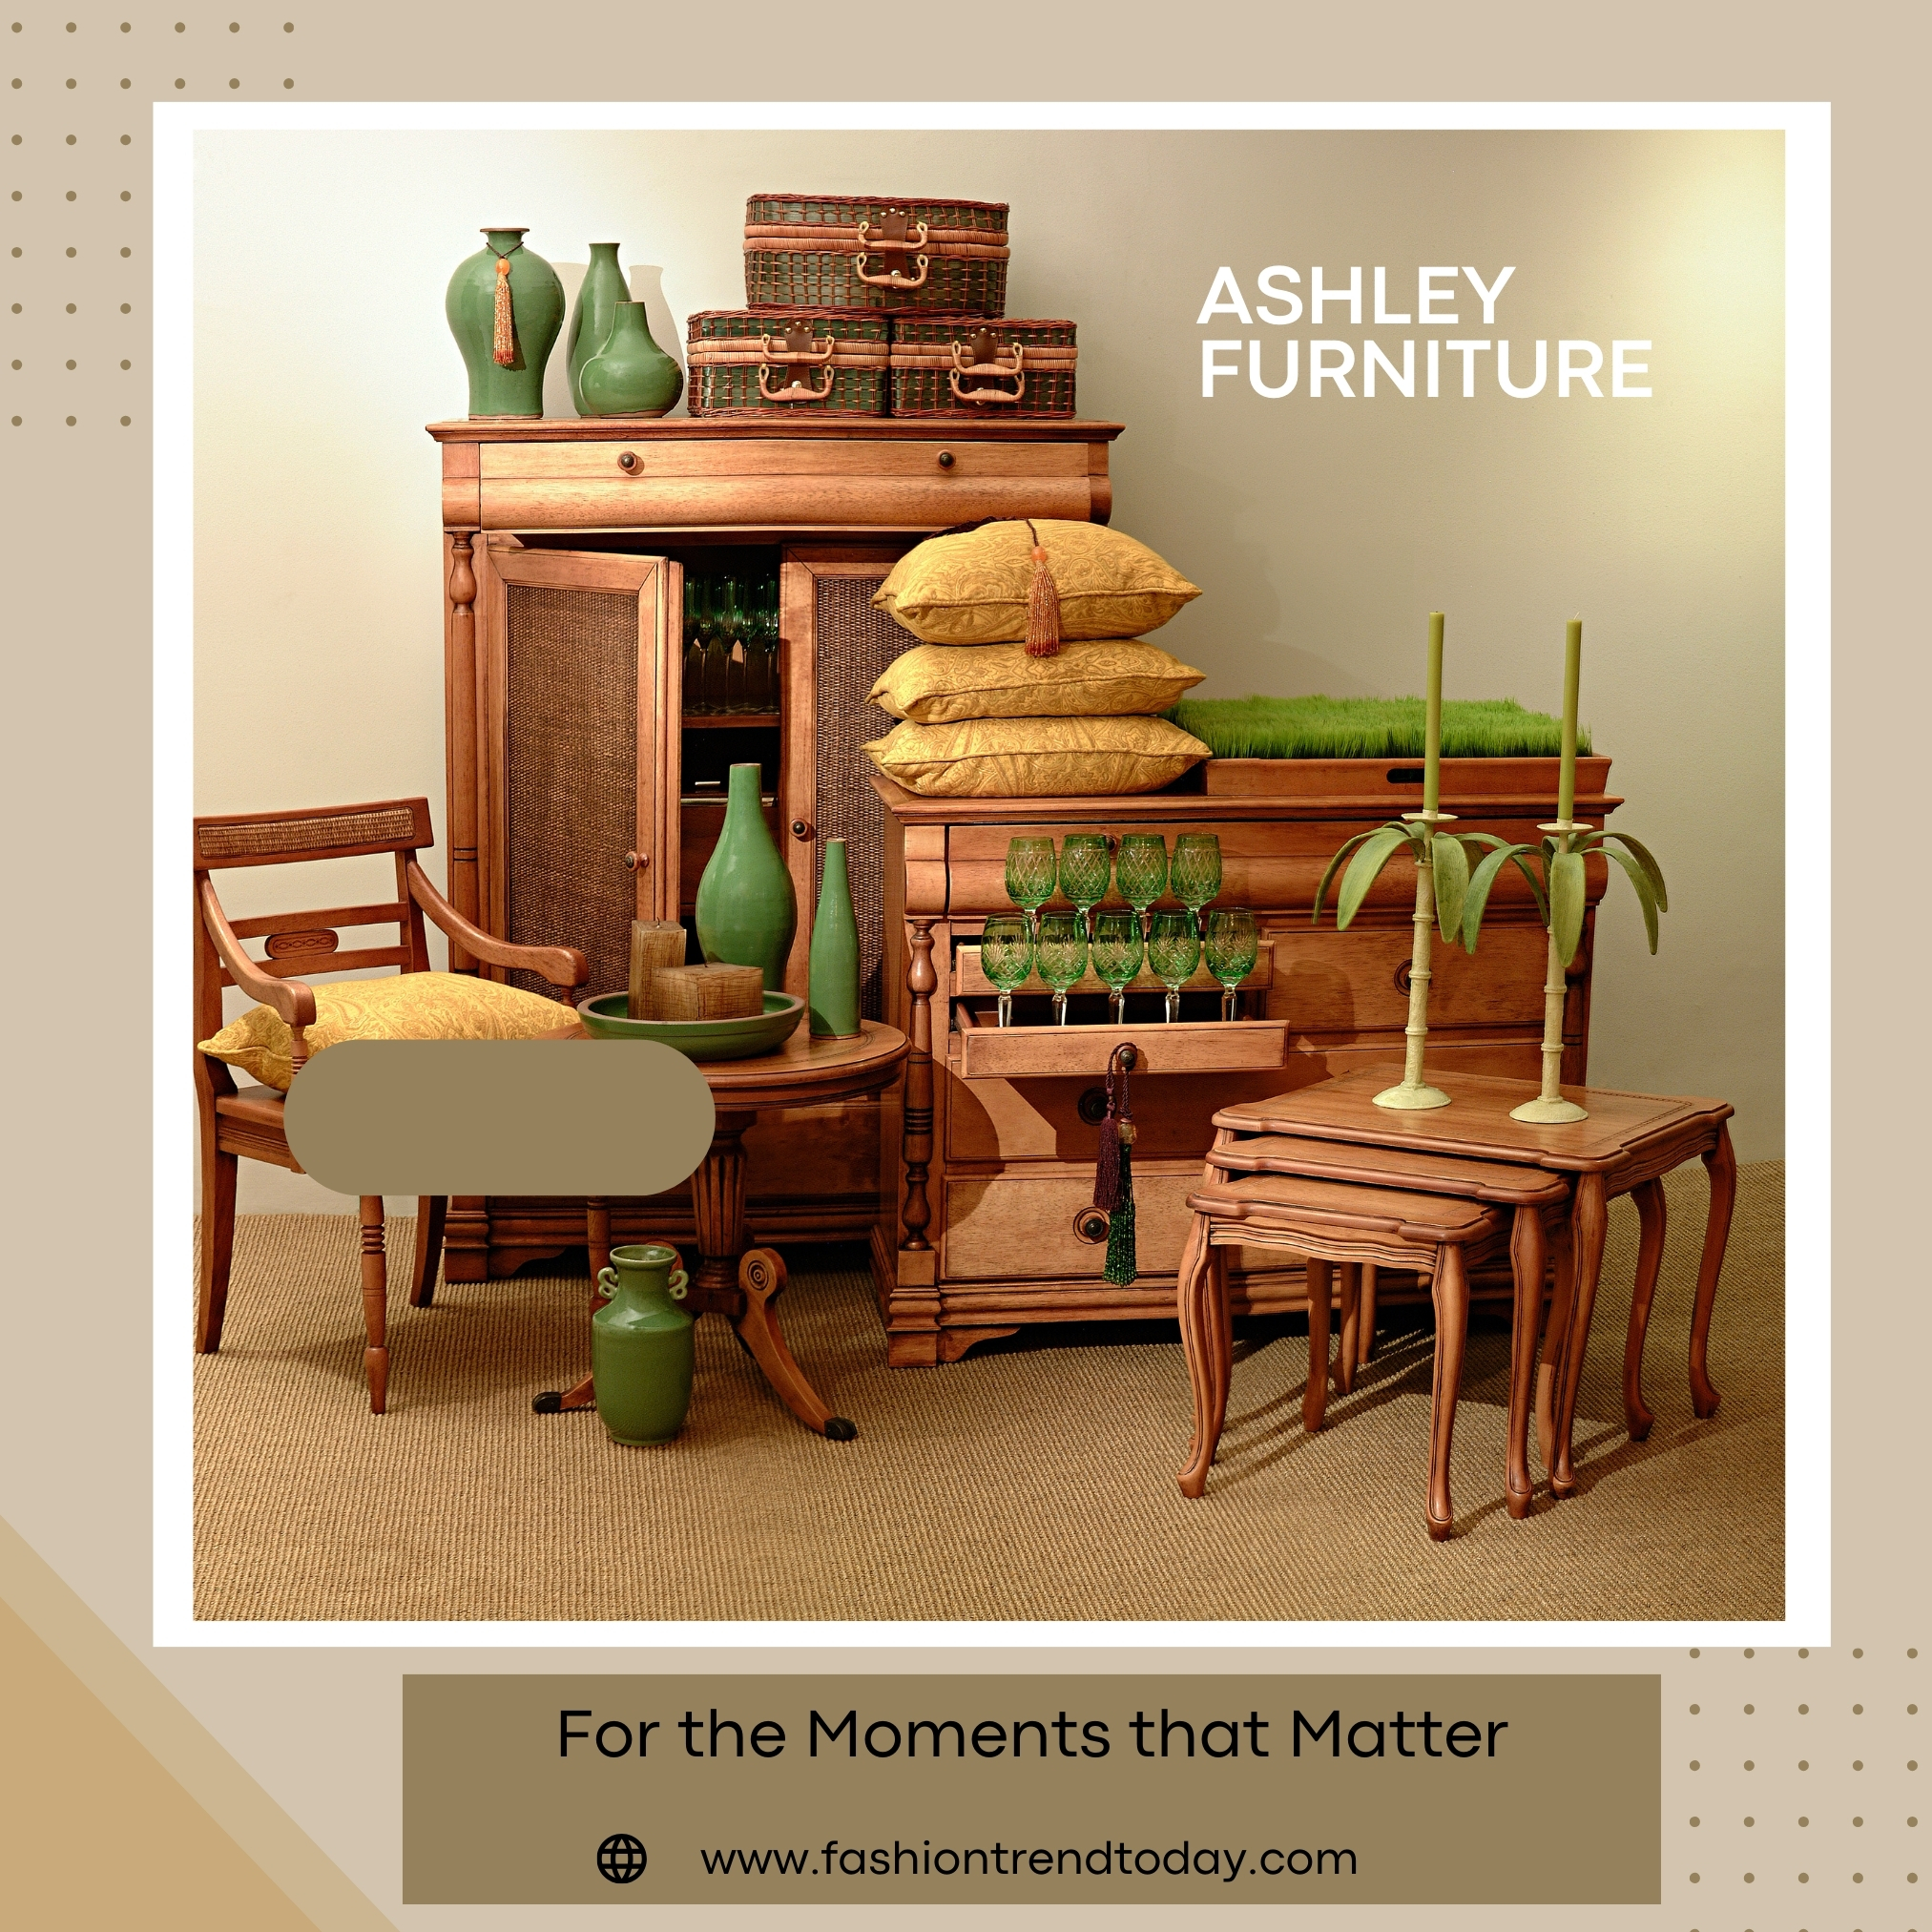 Ashley Furniture The Art of Comfort.